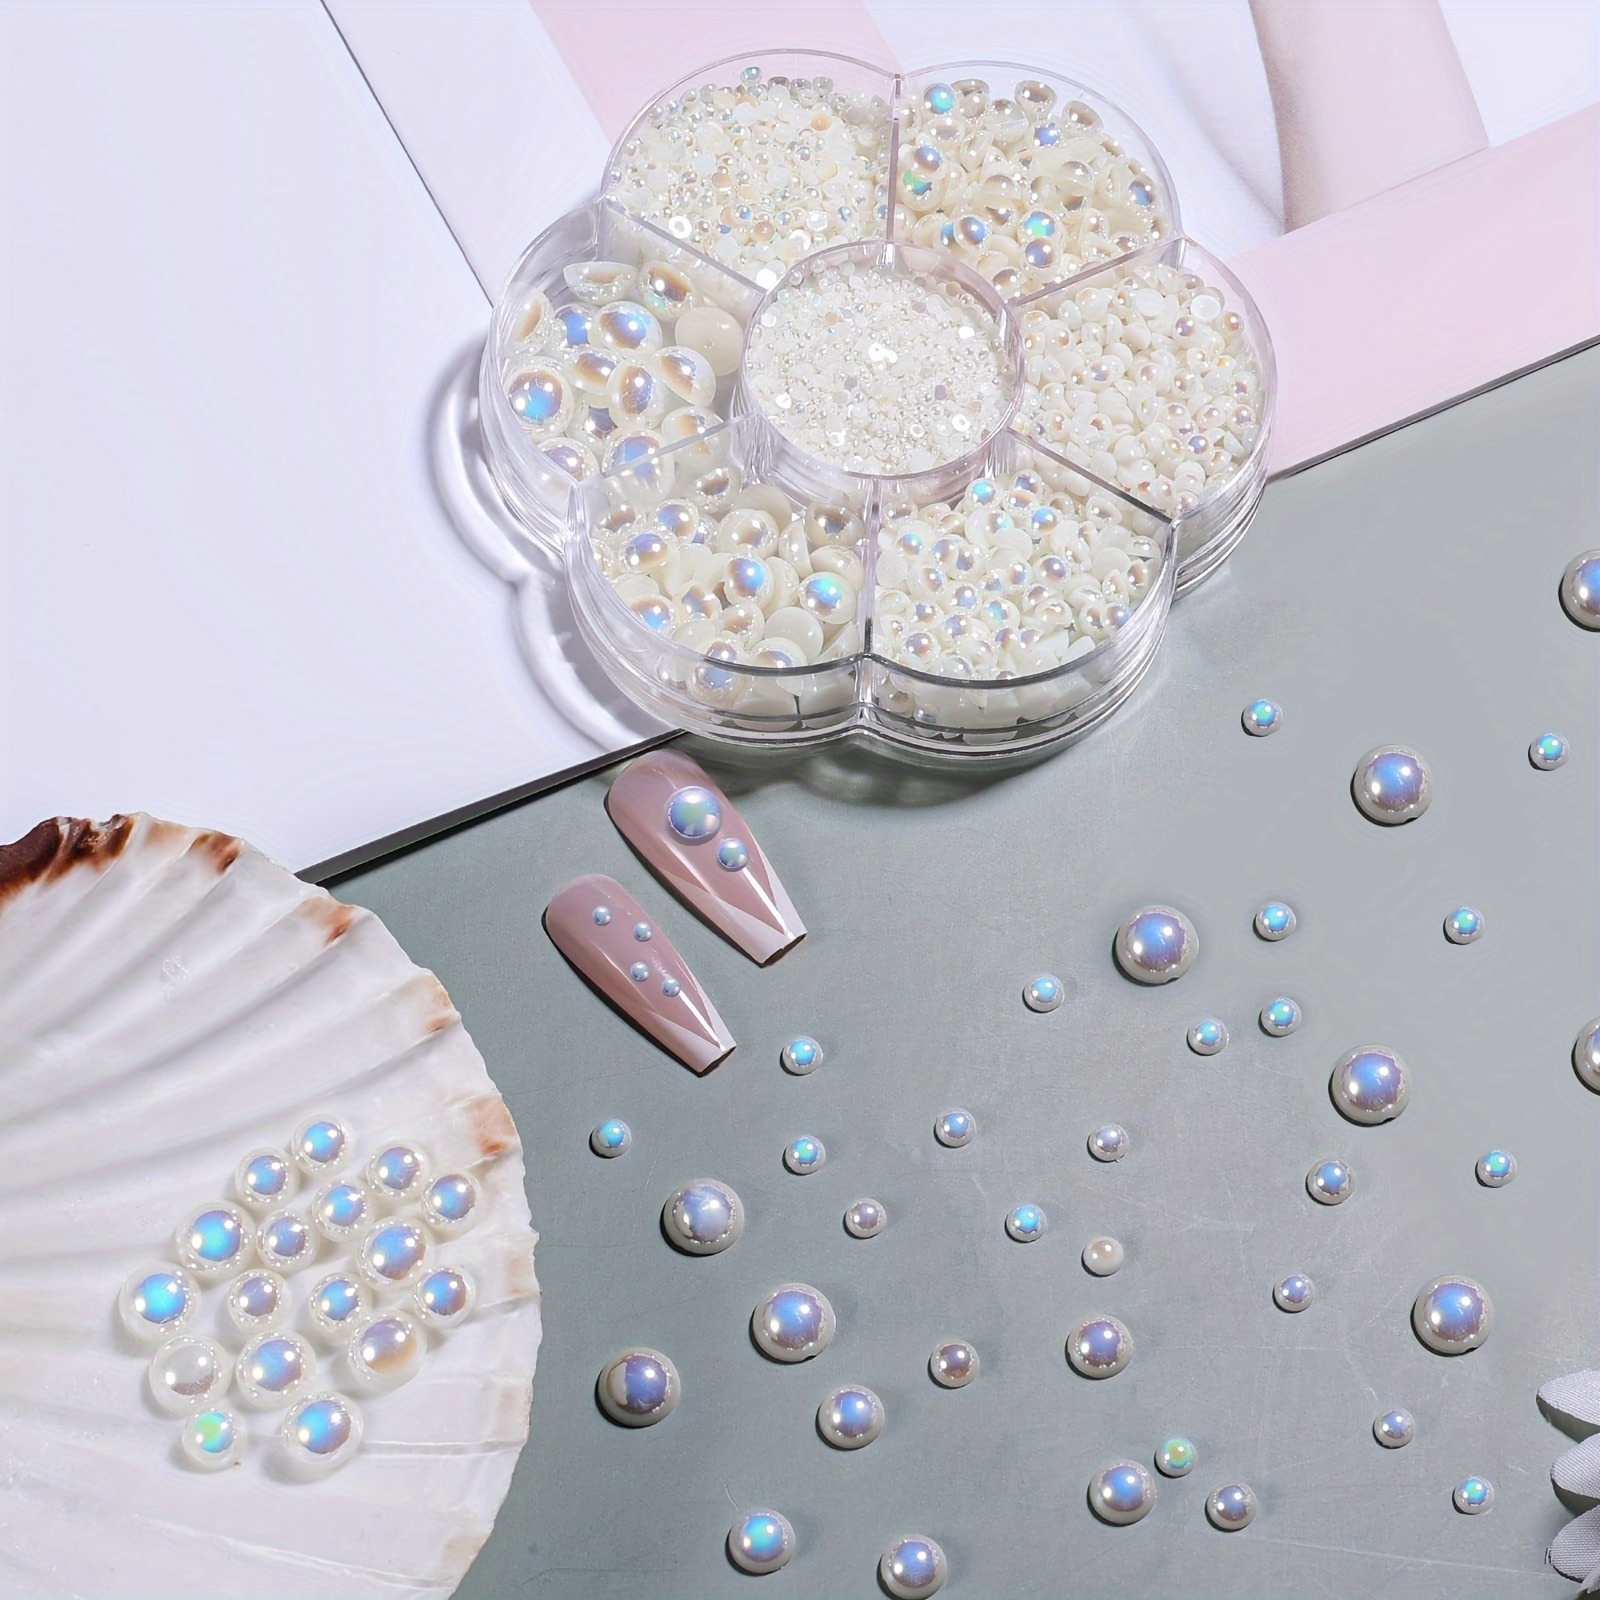 

5600pcs Half-round Pearls Set, Assorted Sizes (2-10mm), Iridescent Luster, Craft & Jewelry Making Kit, Wedding Dress & Nail Art Decor, Secure Storage Case